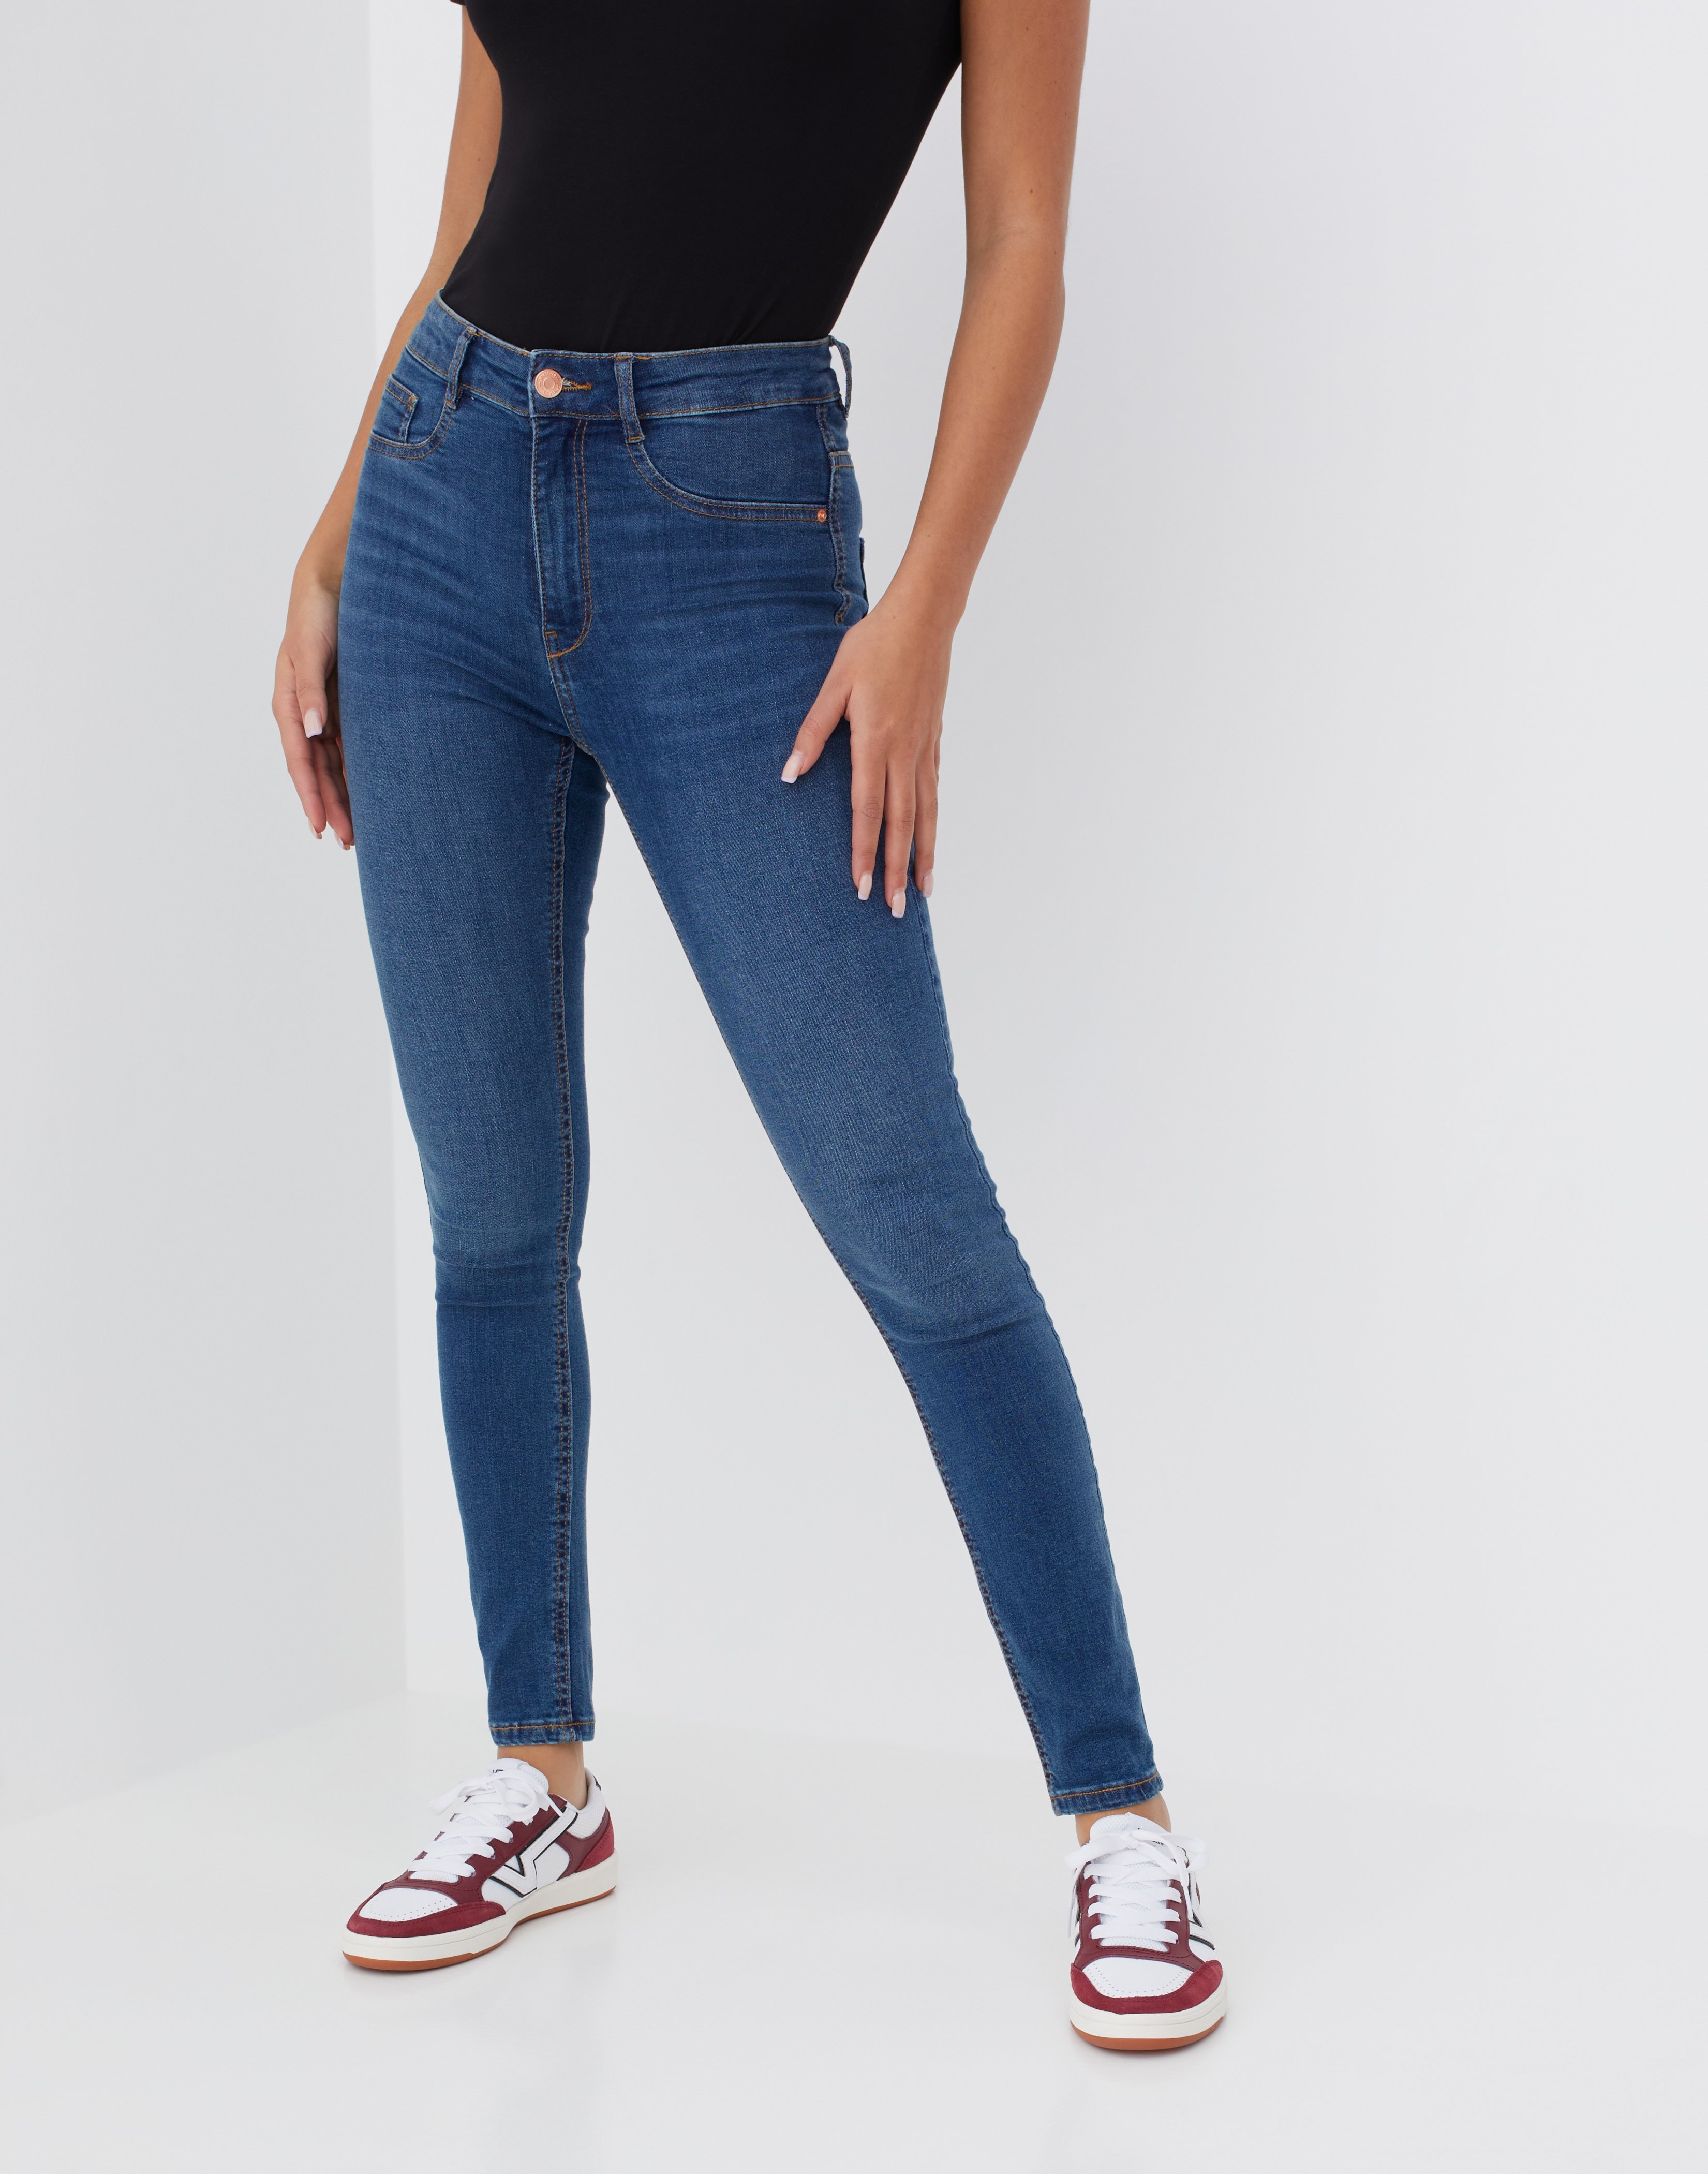 levi jeans 29 inch leg